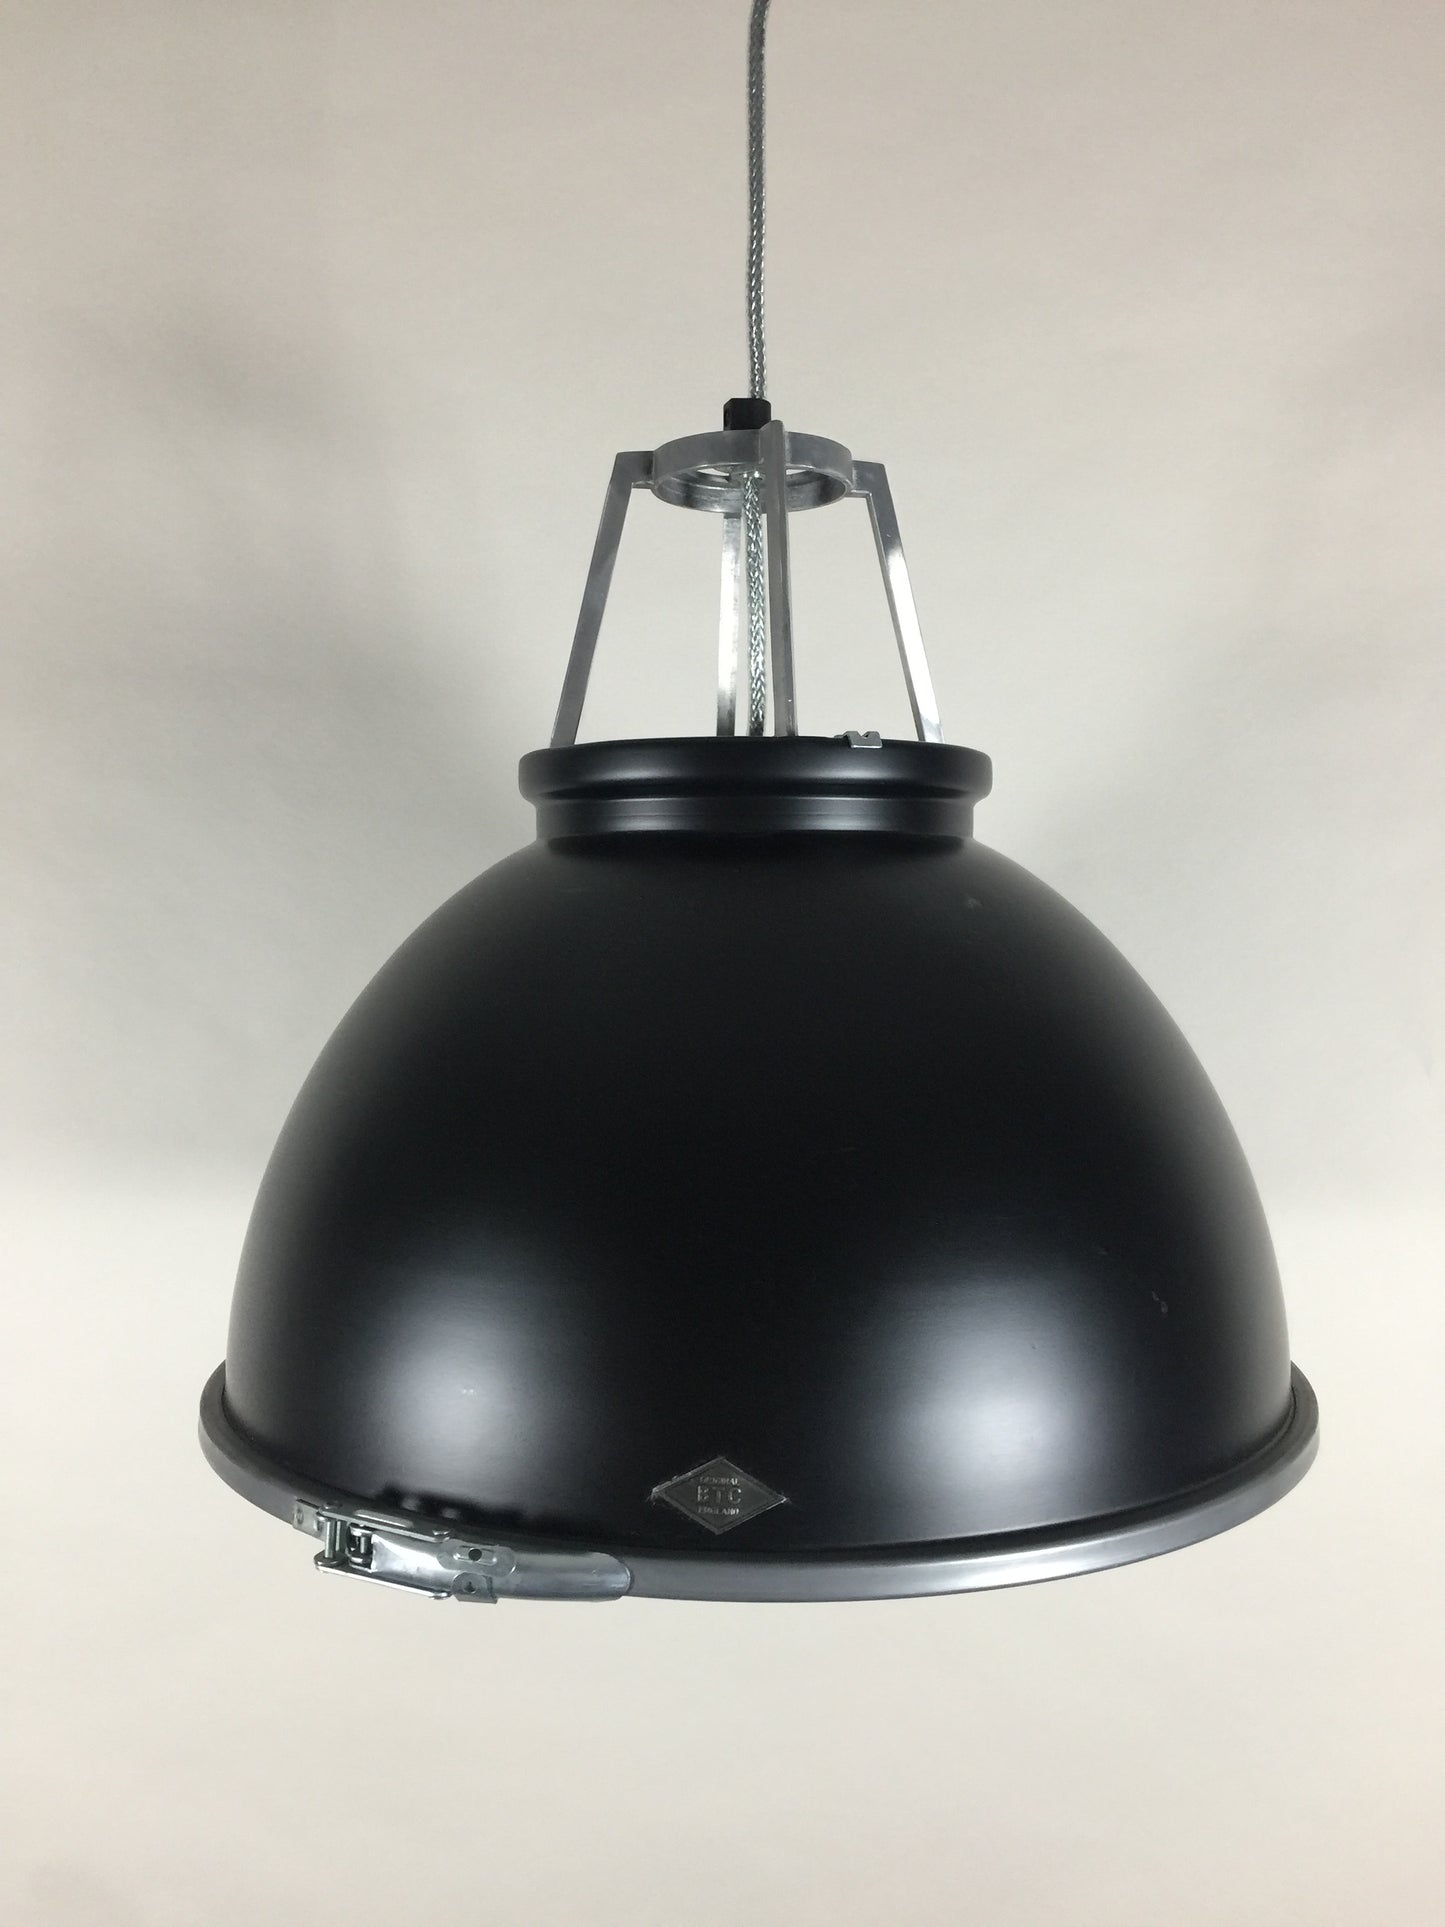 Original BTC Lampe - Titan großes Modell mit sandgestrahltem Glas